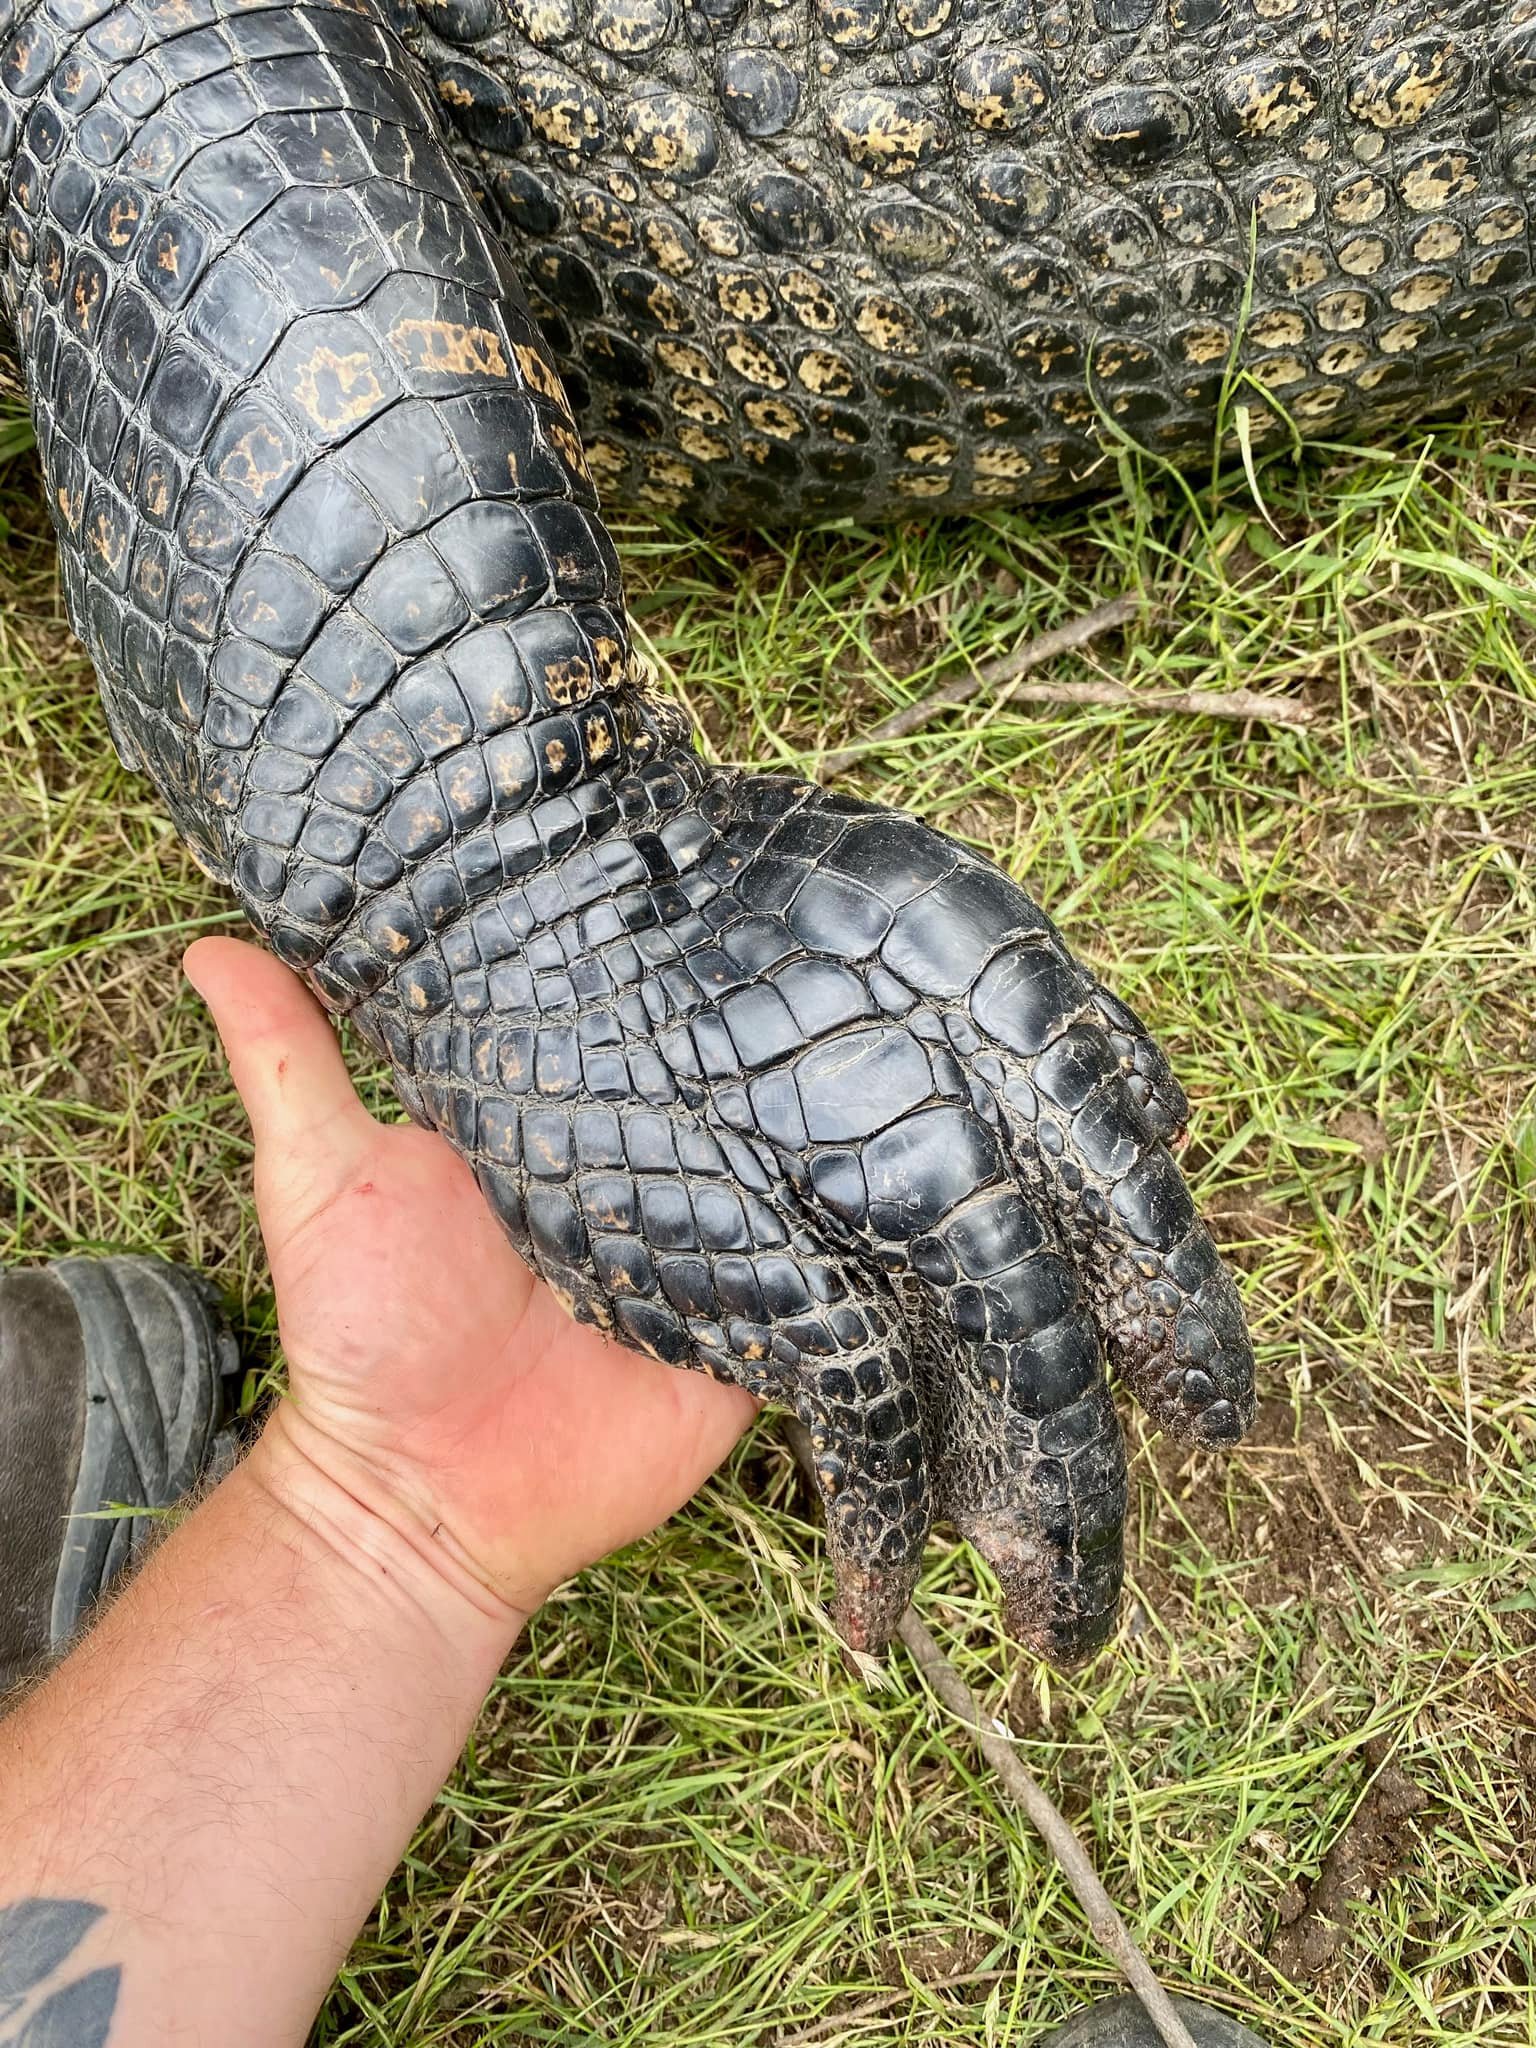 Alligators in Oklahoma Return